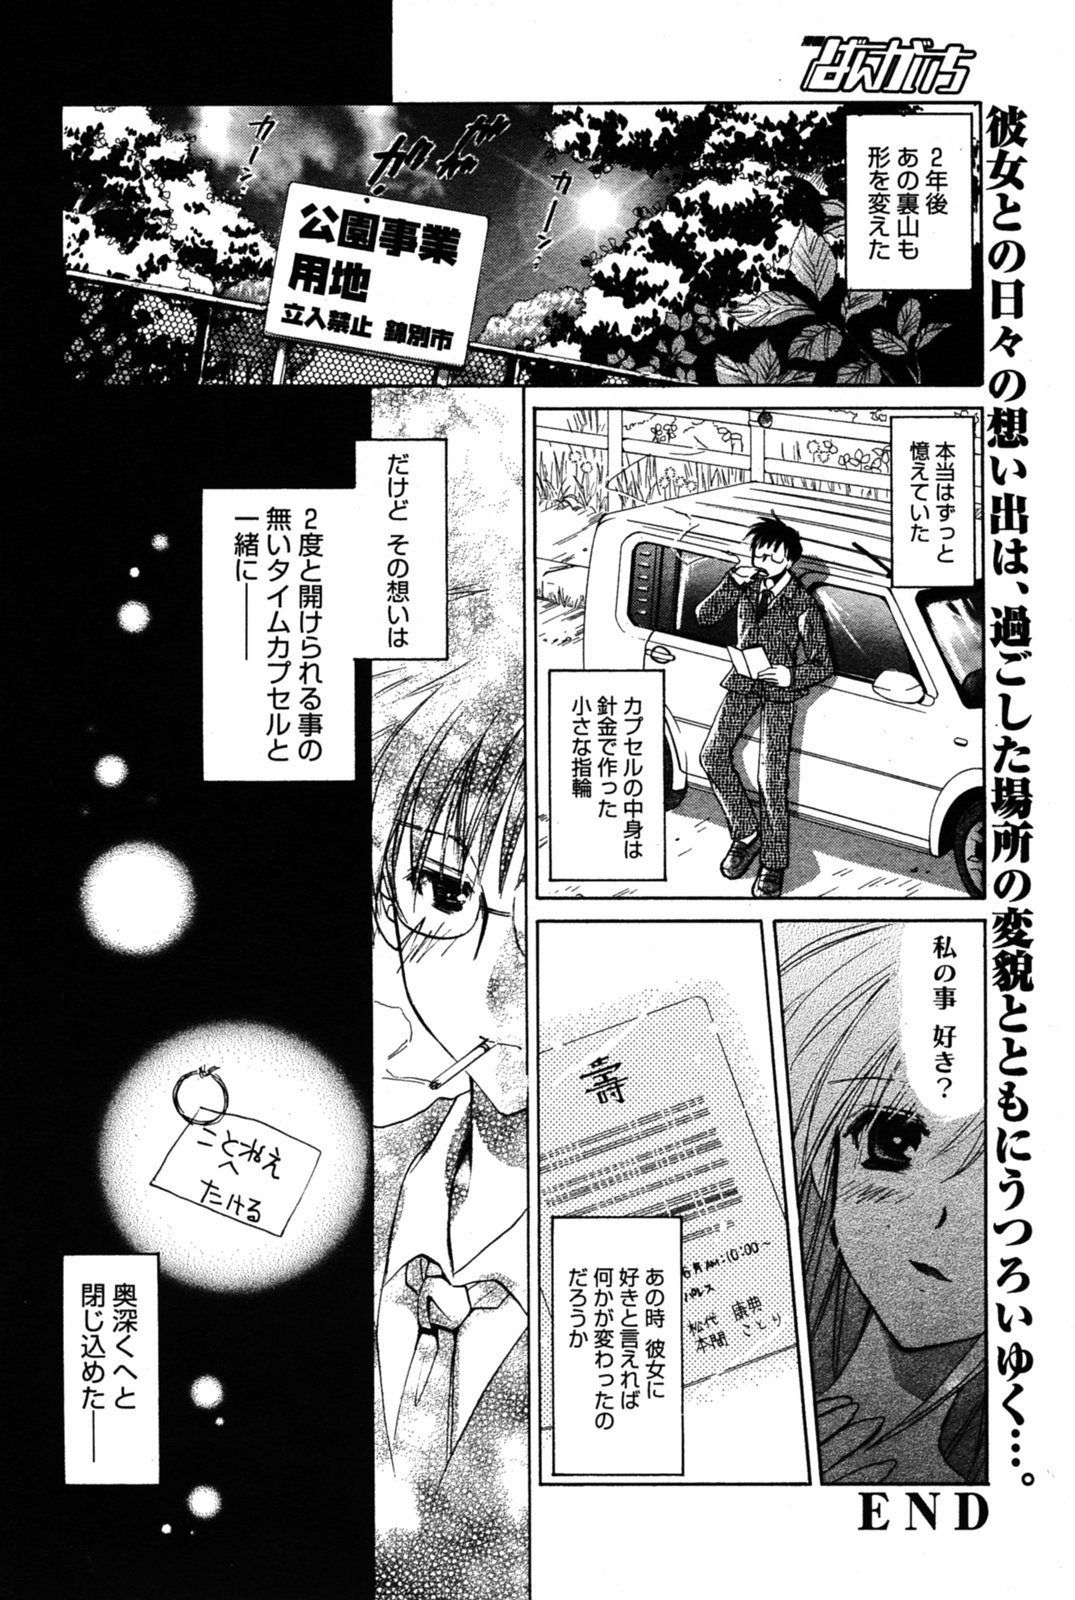 [Anthology] Bangaichi 2005 08 漫画ばんがいち 2005年08月号